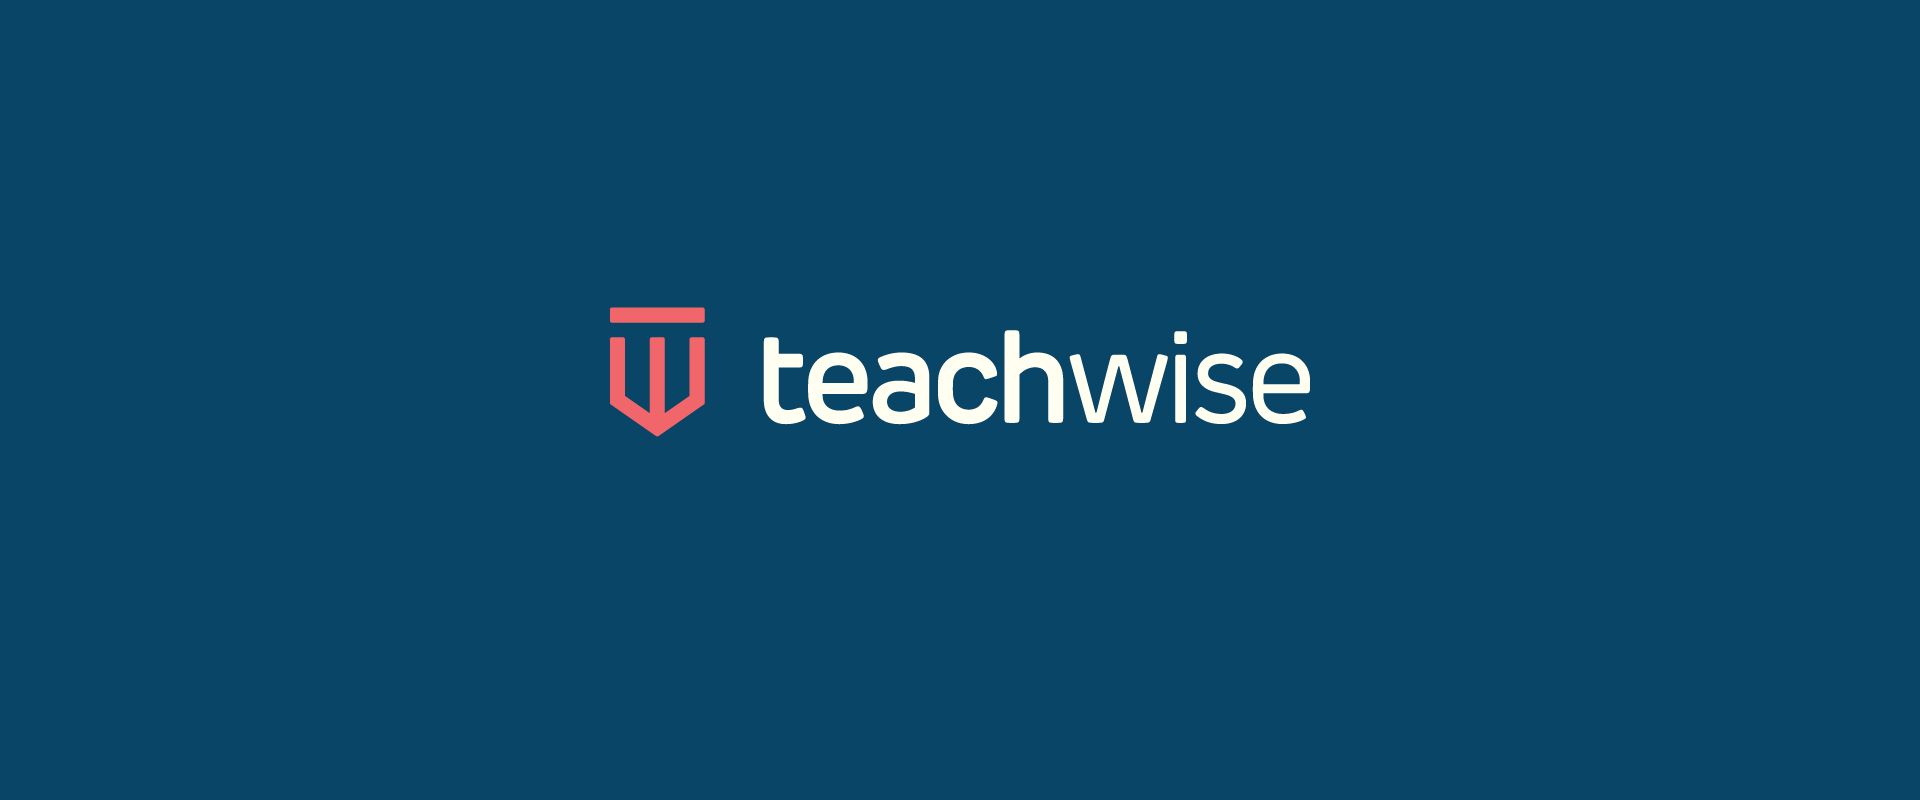 TeachWise London Logo Design